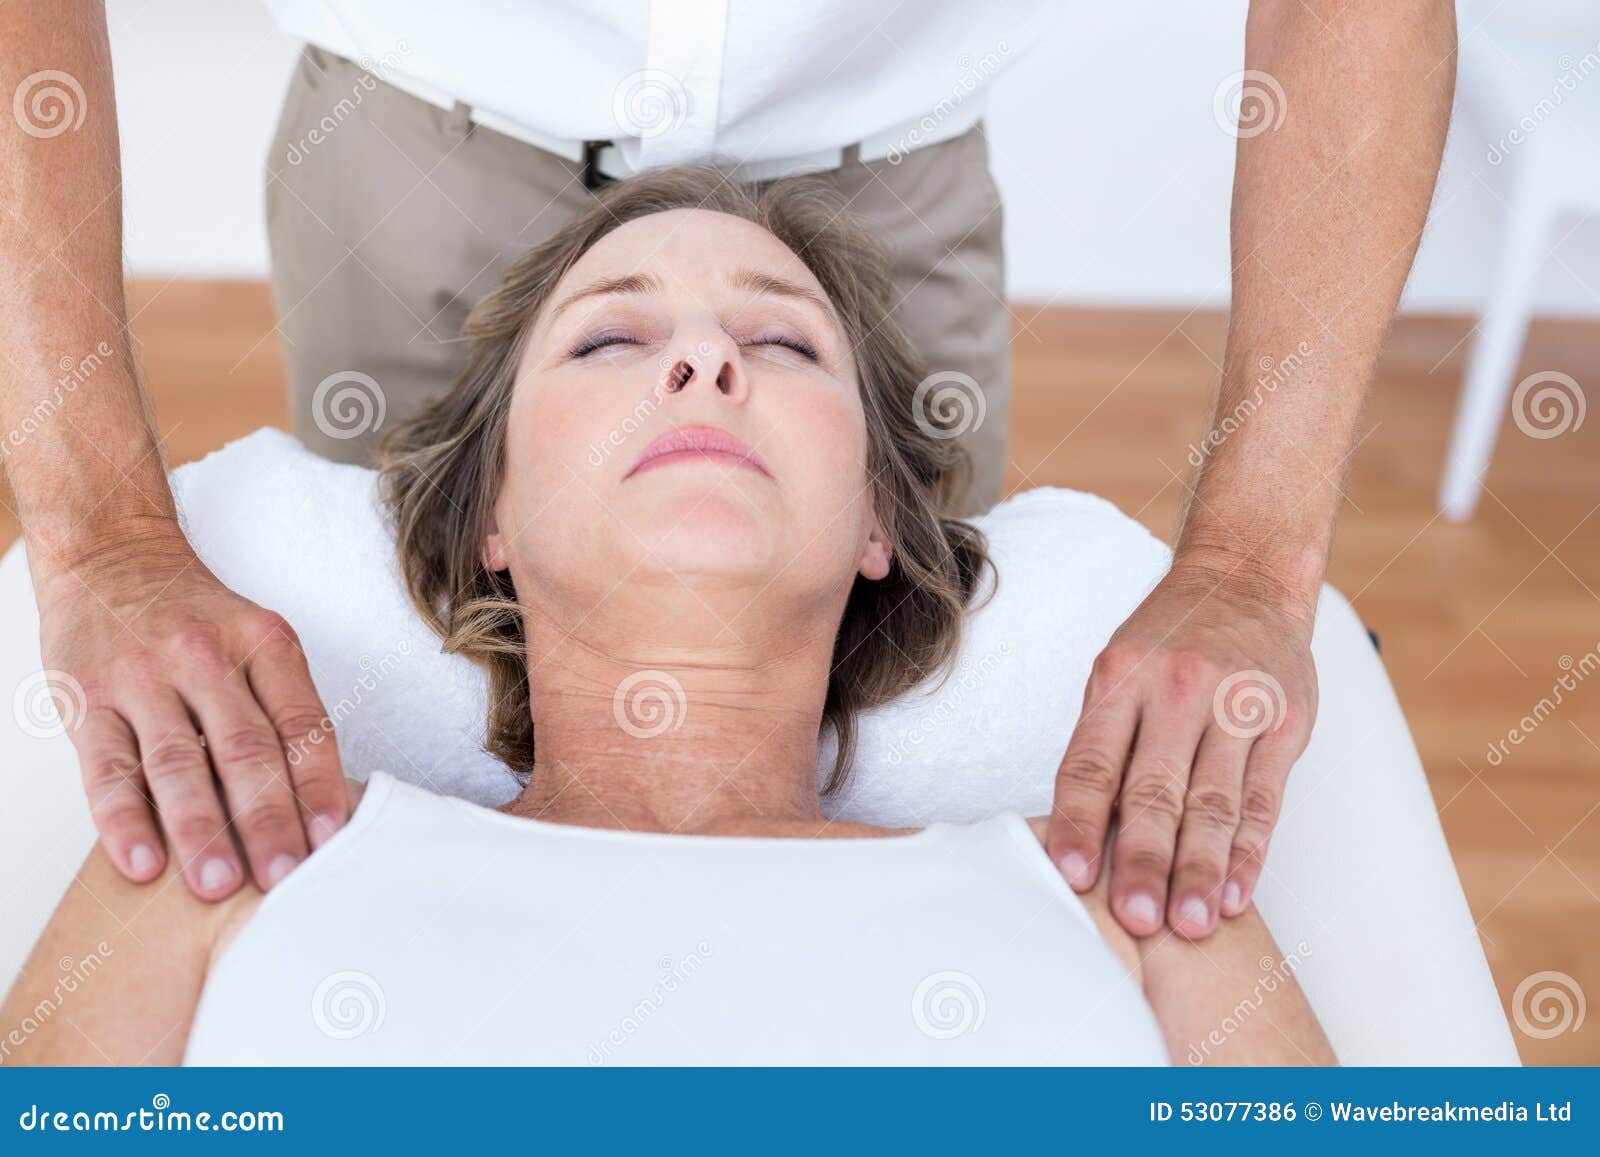 https://thumbs.dreamstime.com/z/woman-receiving-shoulder-massage-medical-office-53077386.jpg